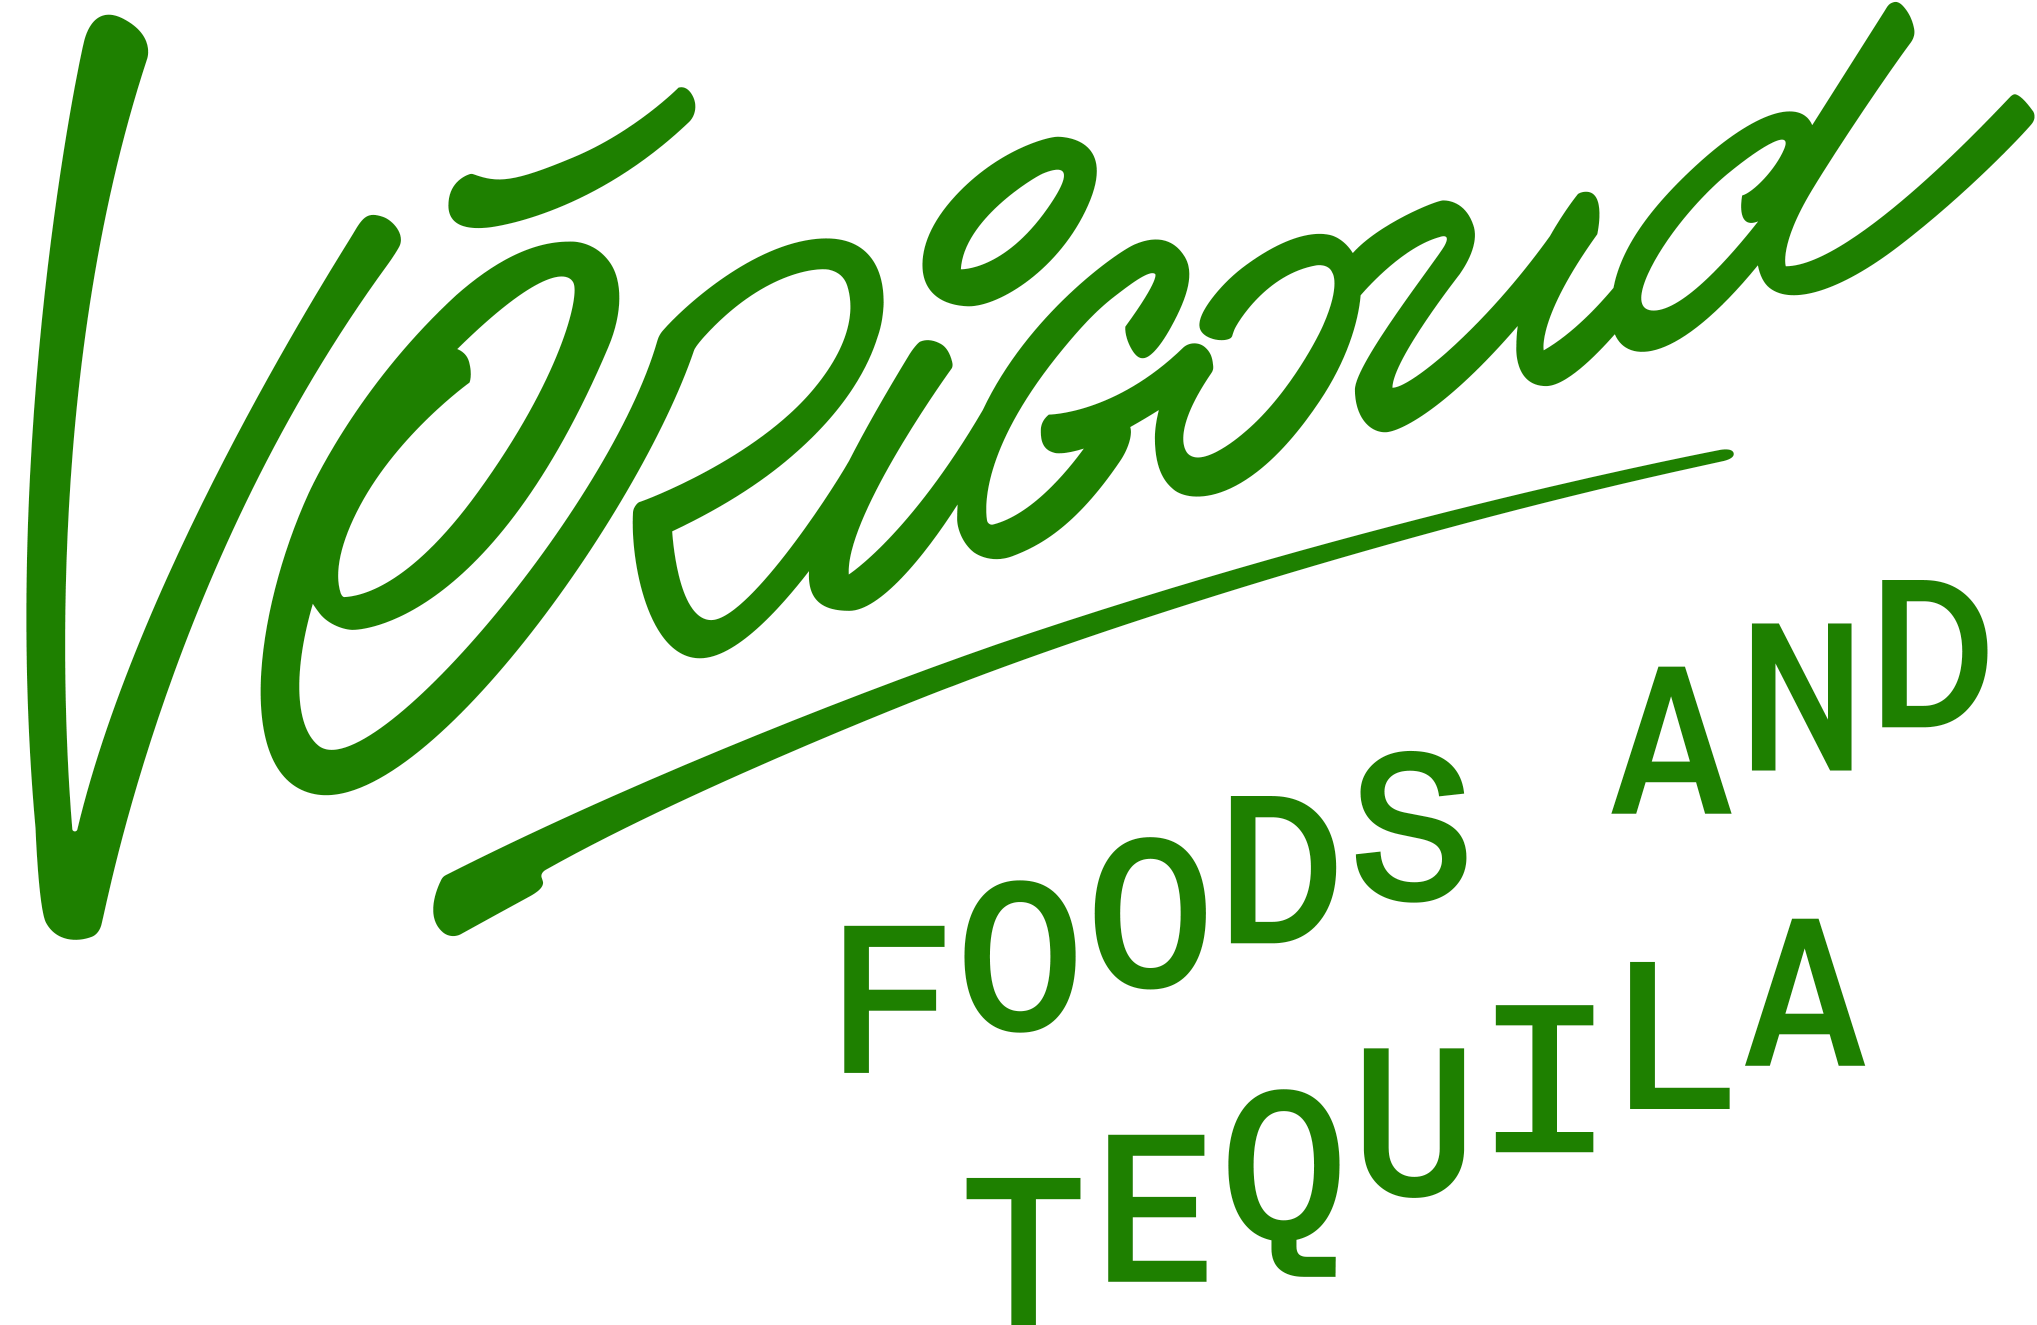 Verigoud - Foods and Tequila